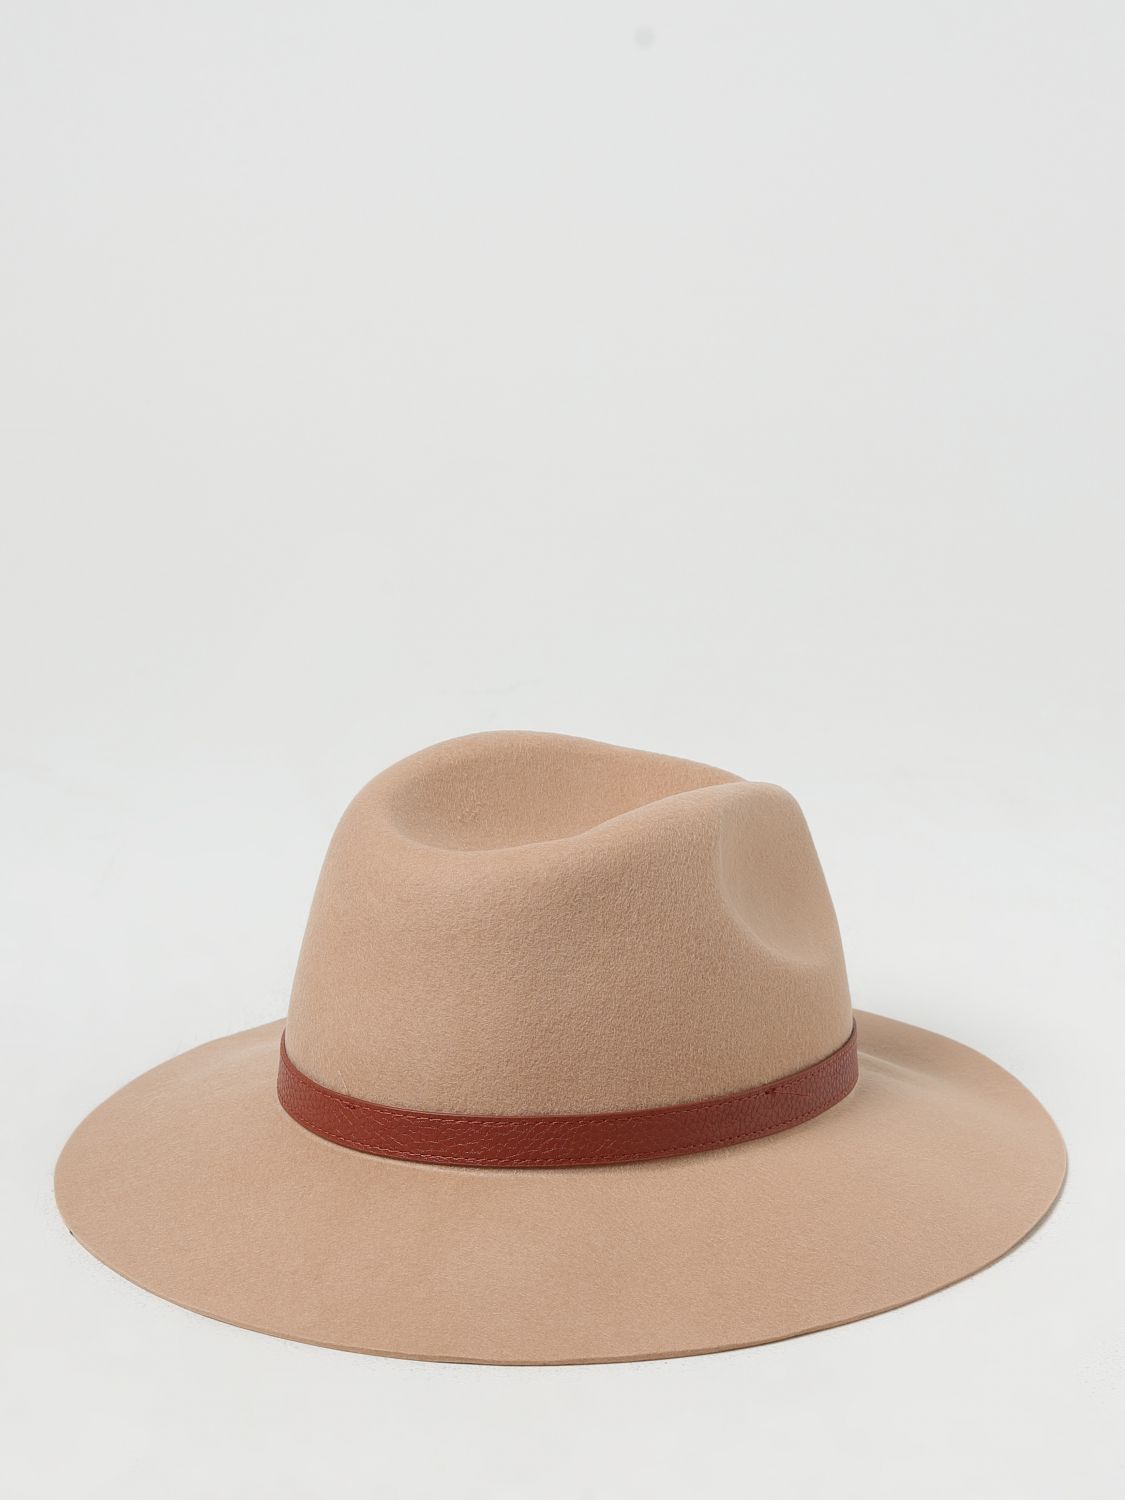 Stetson Hats for Women - Vestiaire Collective